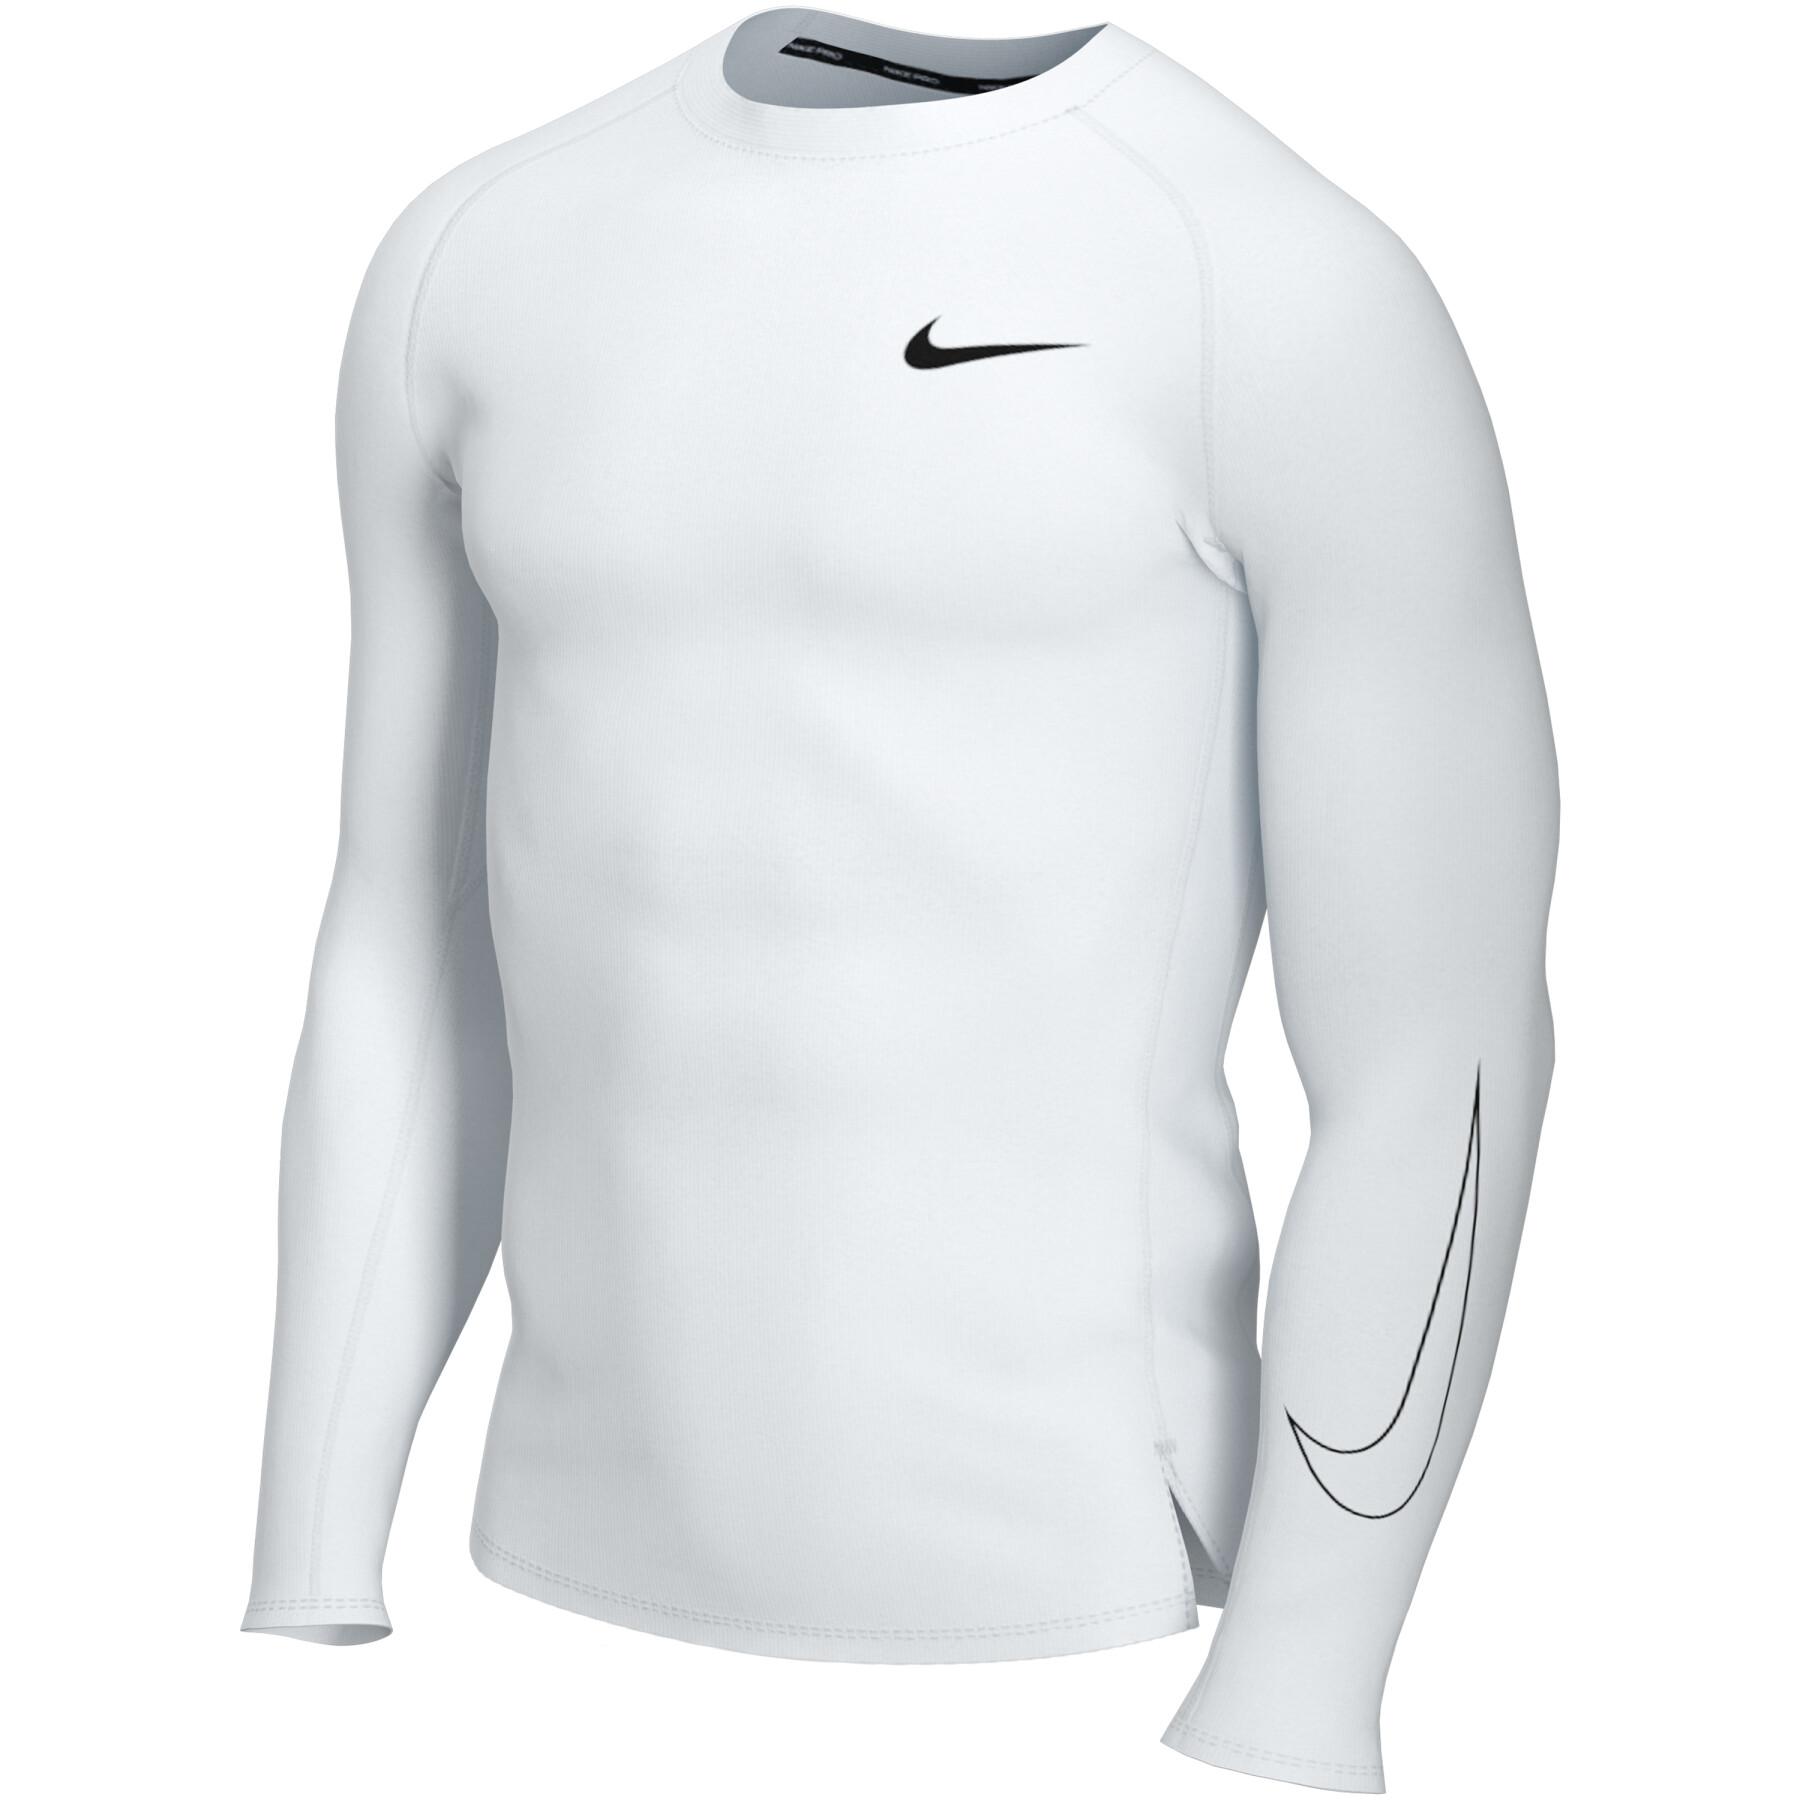 T-Shirt de Sport Compression Homme Maillot Manches Longues Vetement de  Fitness Running - Blanc KJEHOME